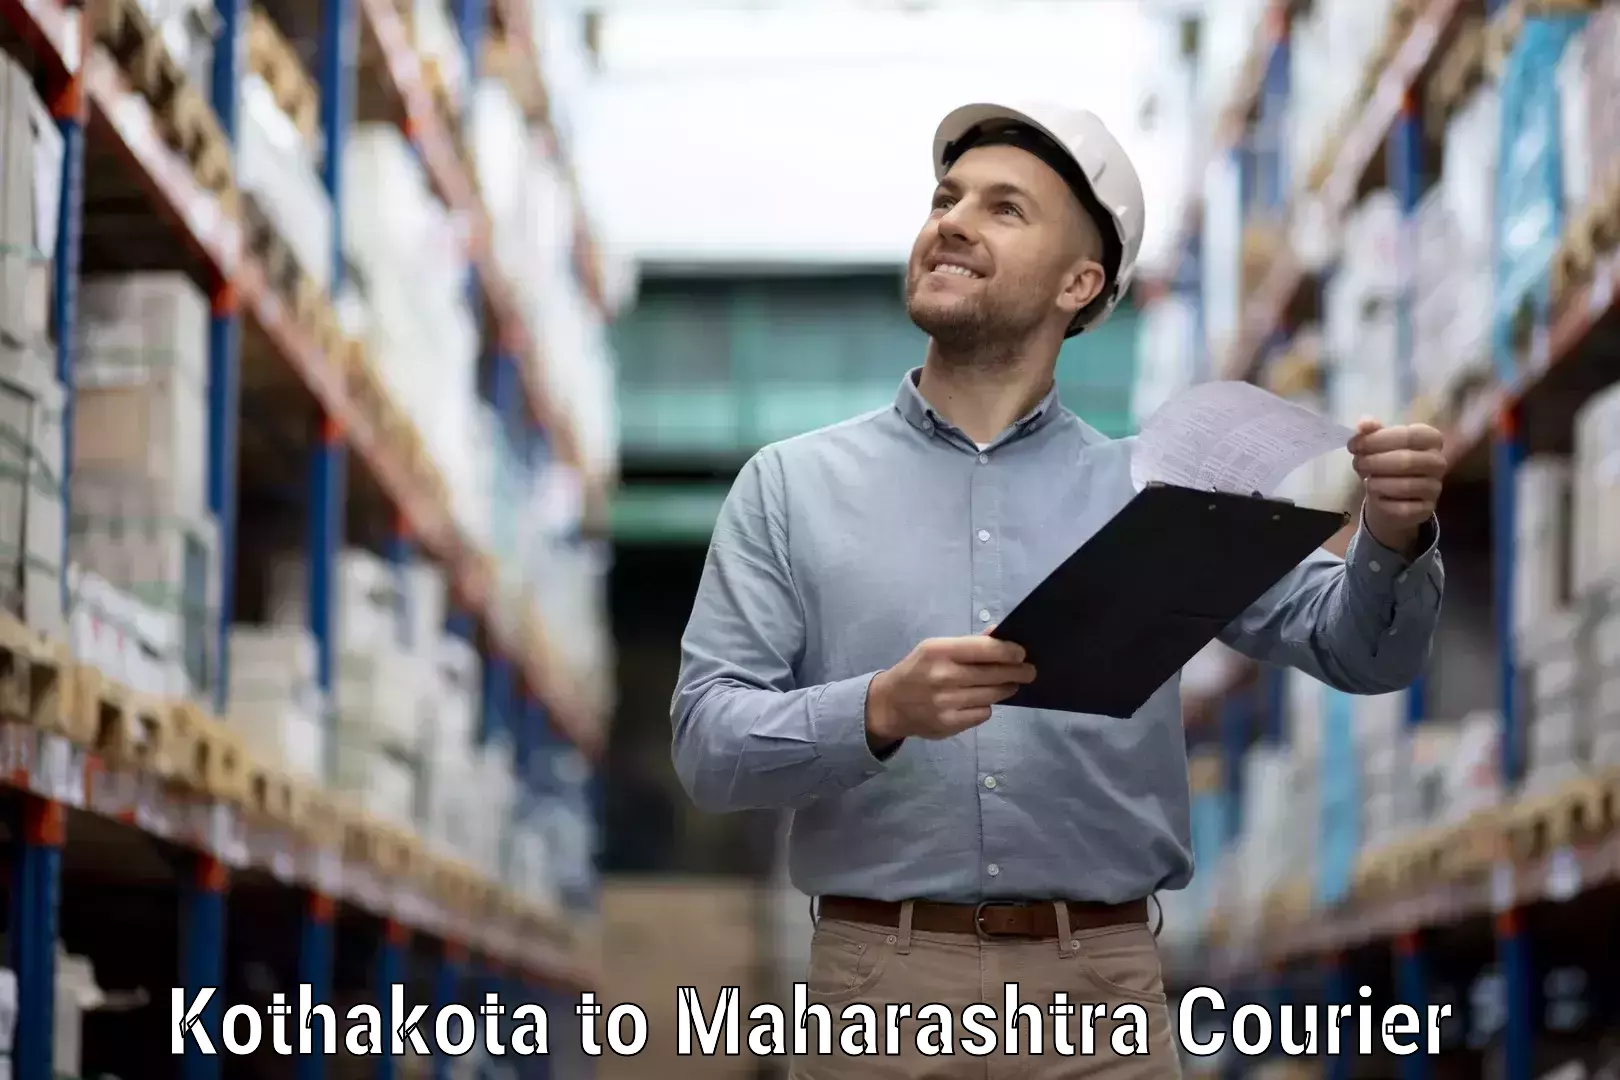 Courier insurance Kothakota to Raigarh Maharashtra